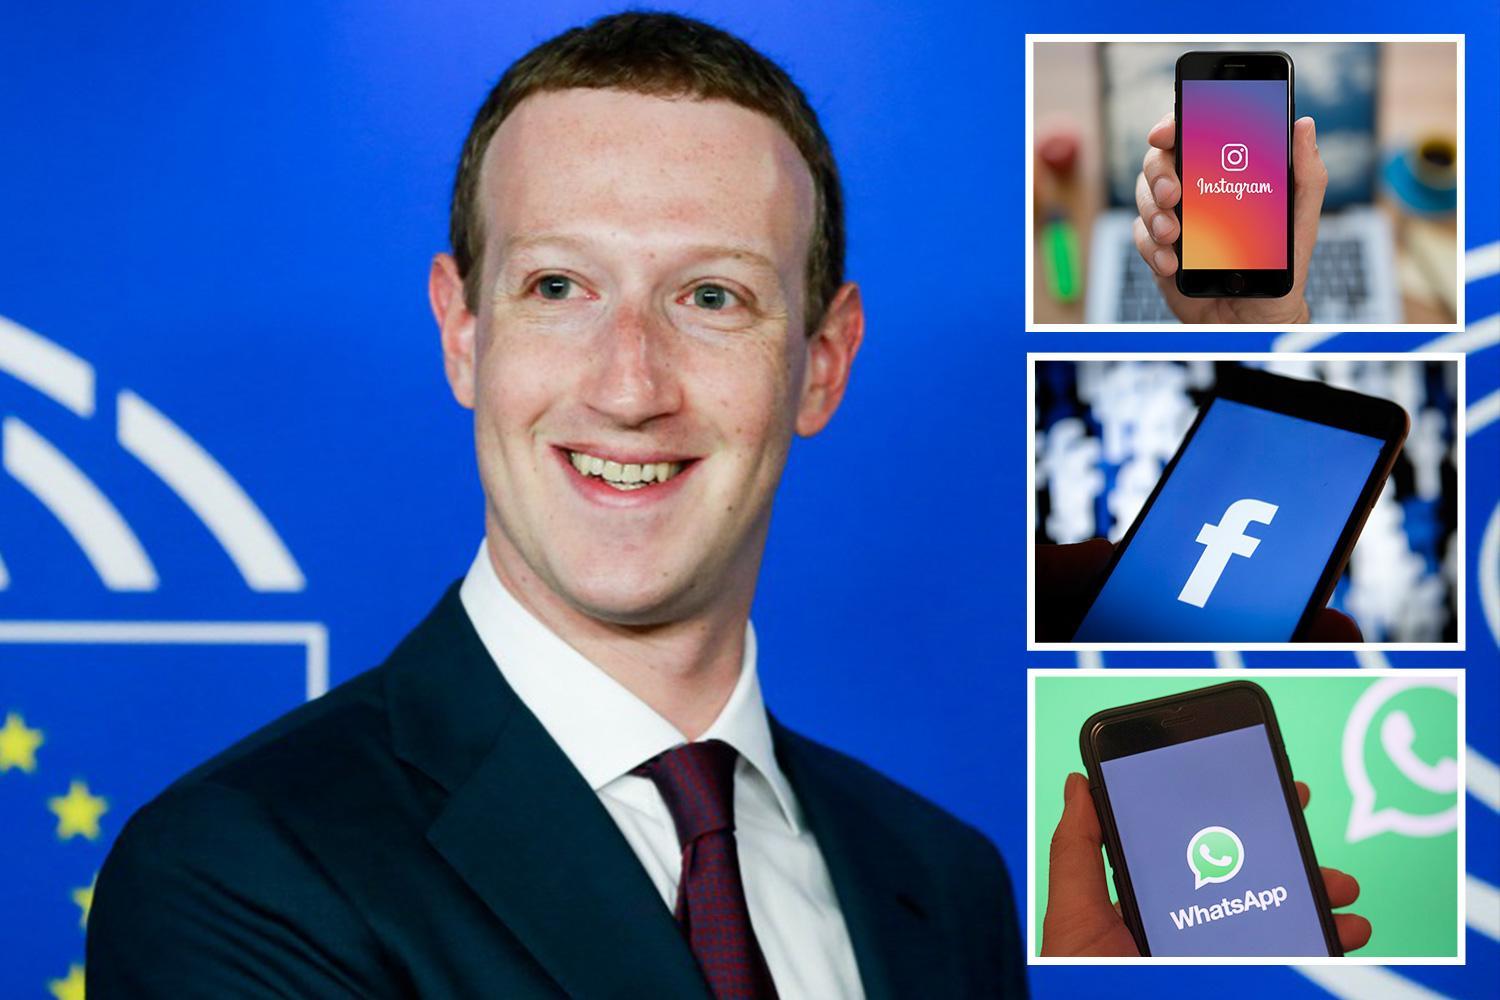  Zuckerberg berlari Facebook, Instagram dan WhatsApp: digunakan oleh miliaran orang di seluruh dunia